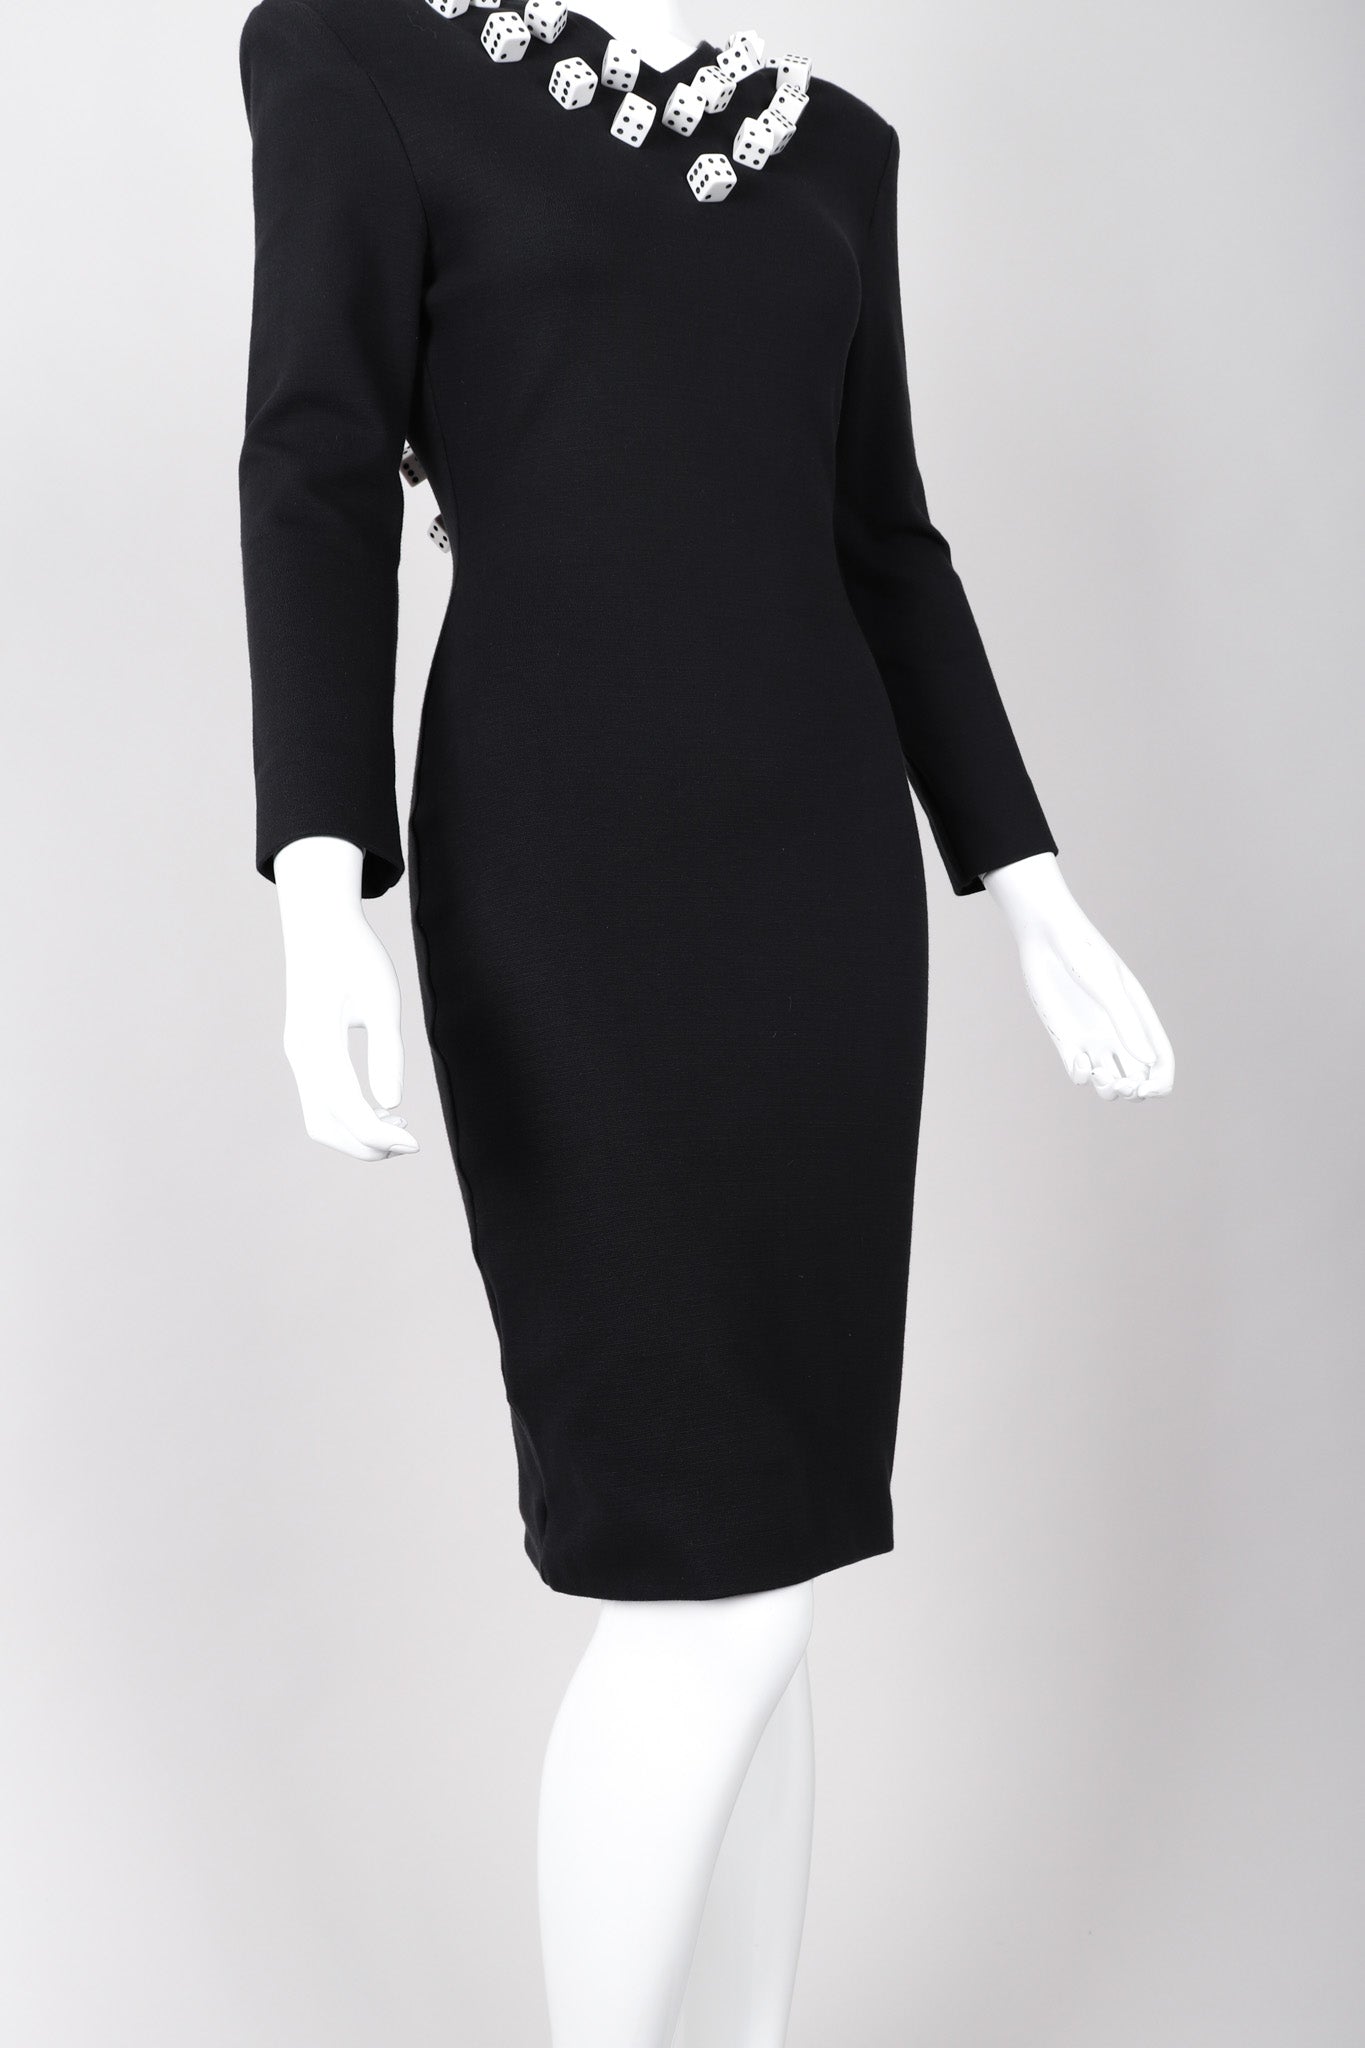 Recess Los Angeles Vintage Patrick Kelly Spandex Dice Black Dress Open V-Back